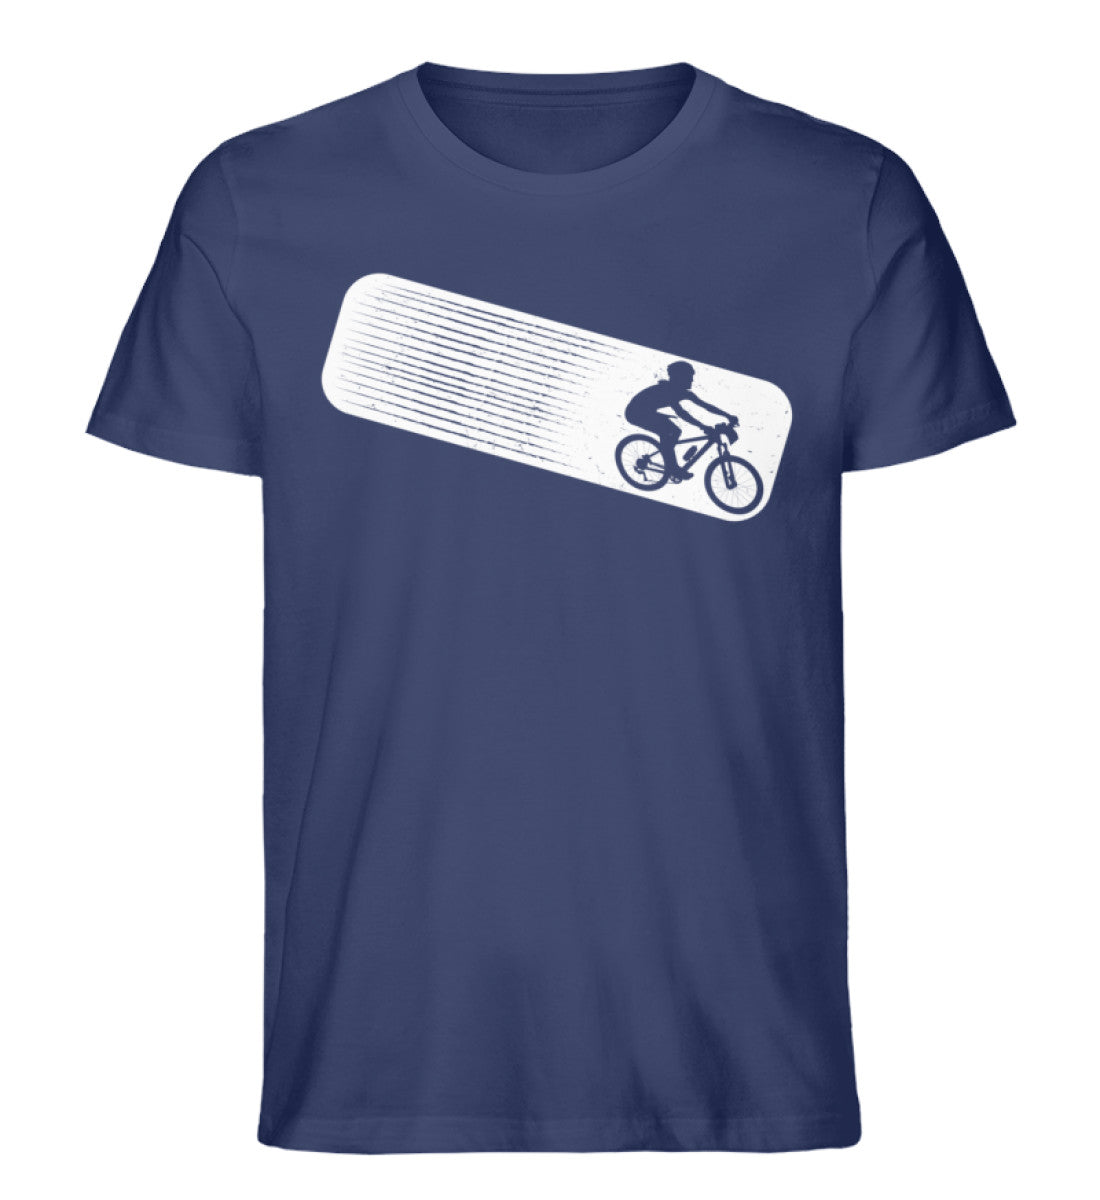 Vintage Radfahrer - Herren Organic T-Shirt fahrrad mountainbike Navyblau